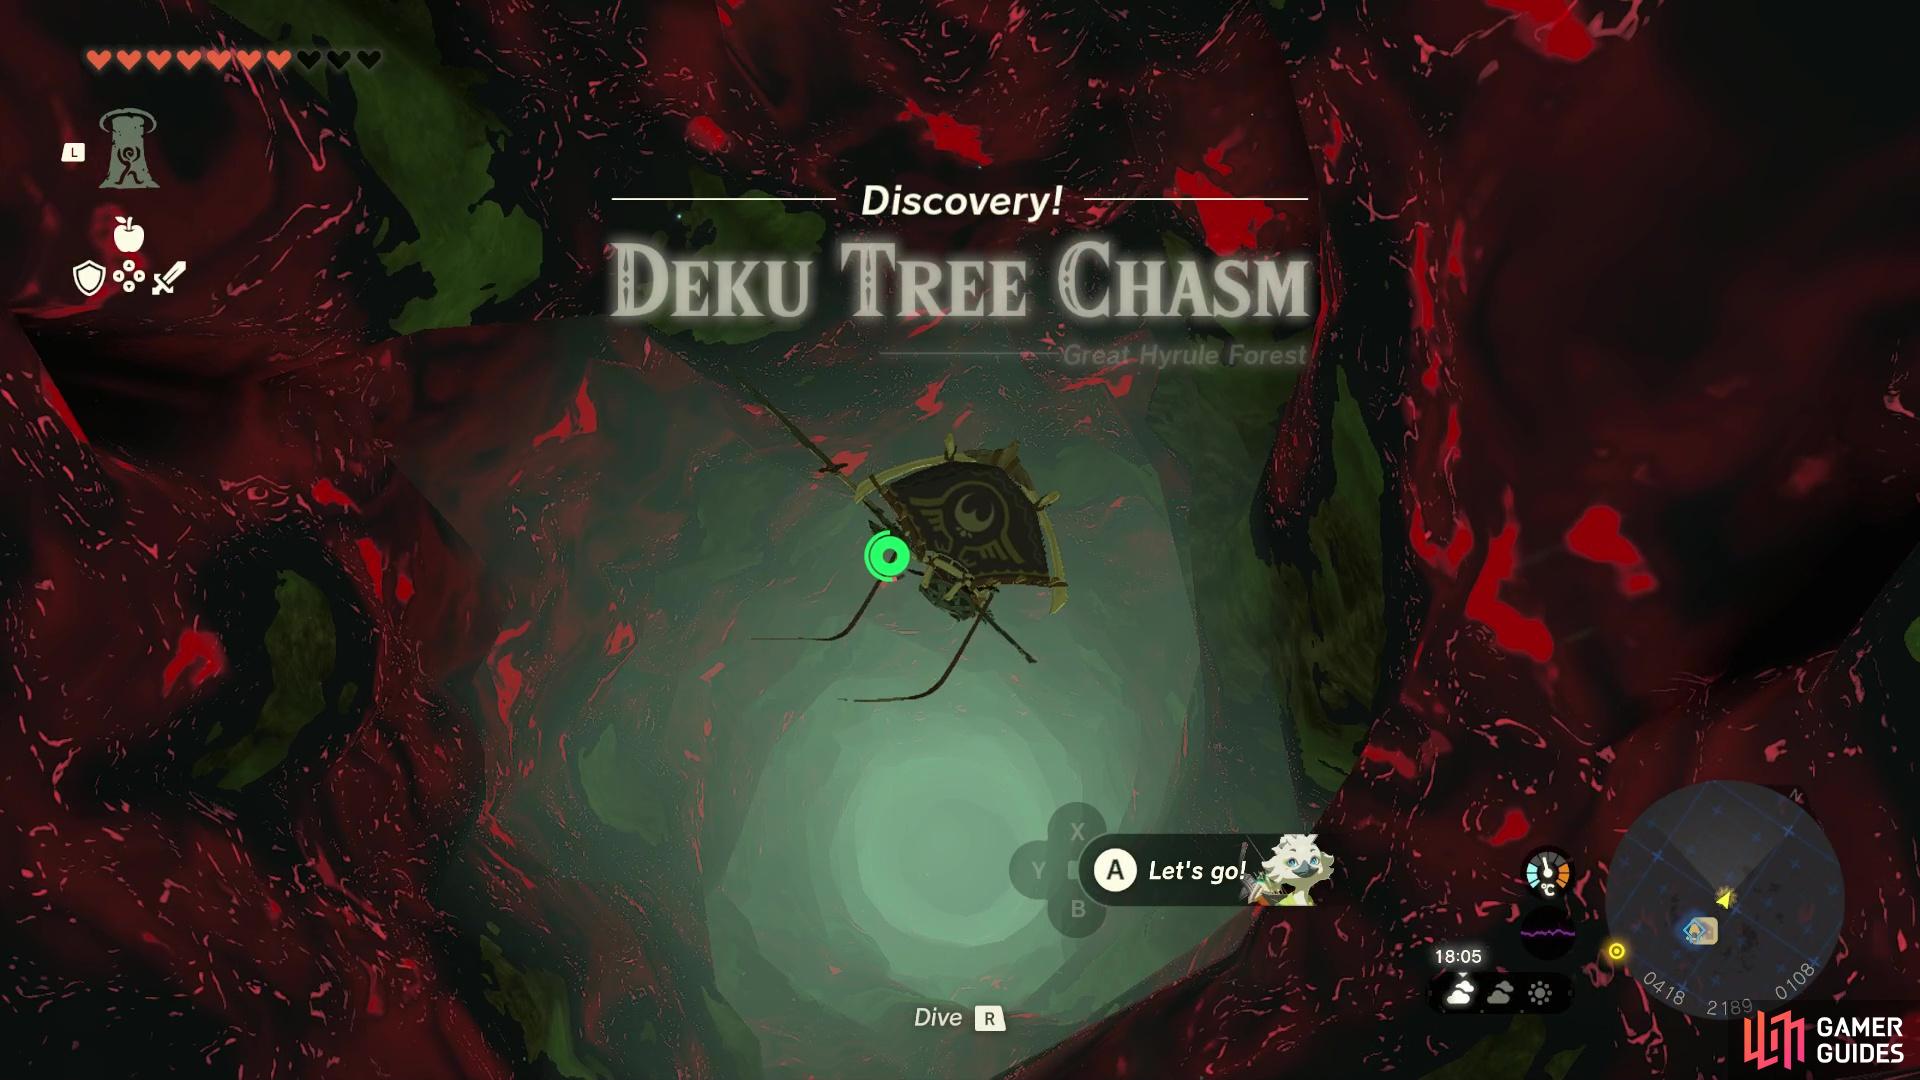 Deku Tree Chasm is found at the base of the Deku Tree.